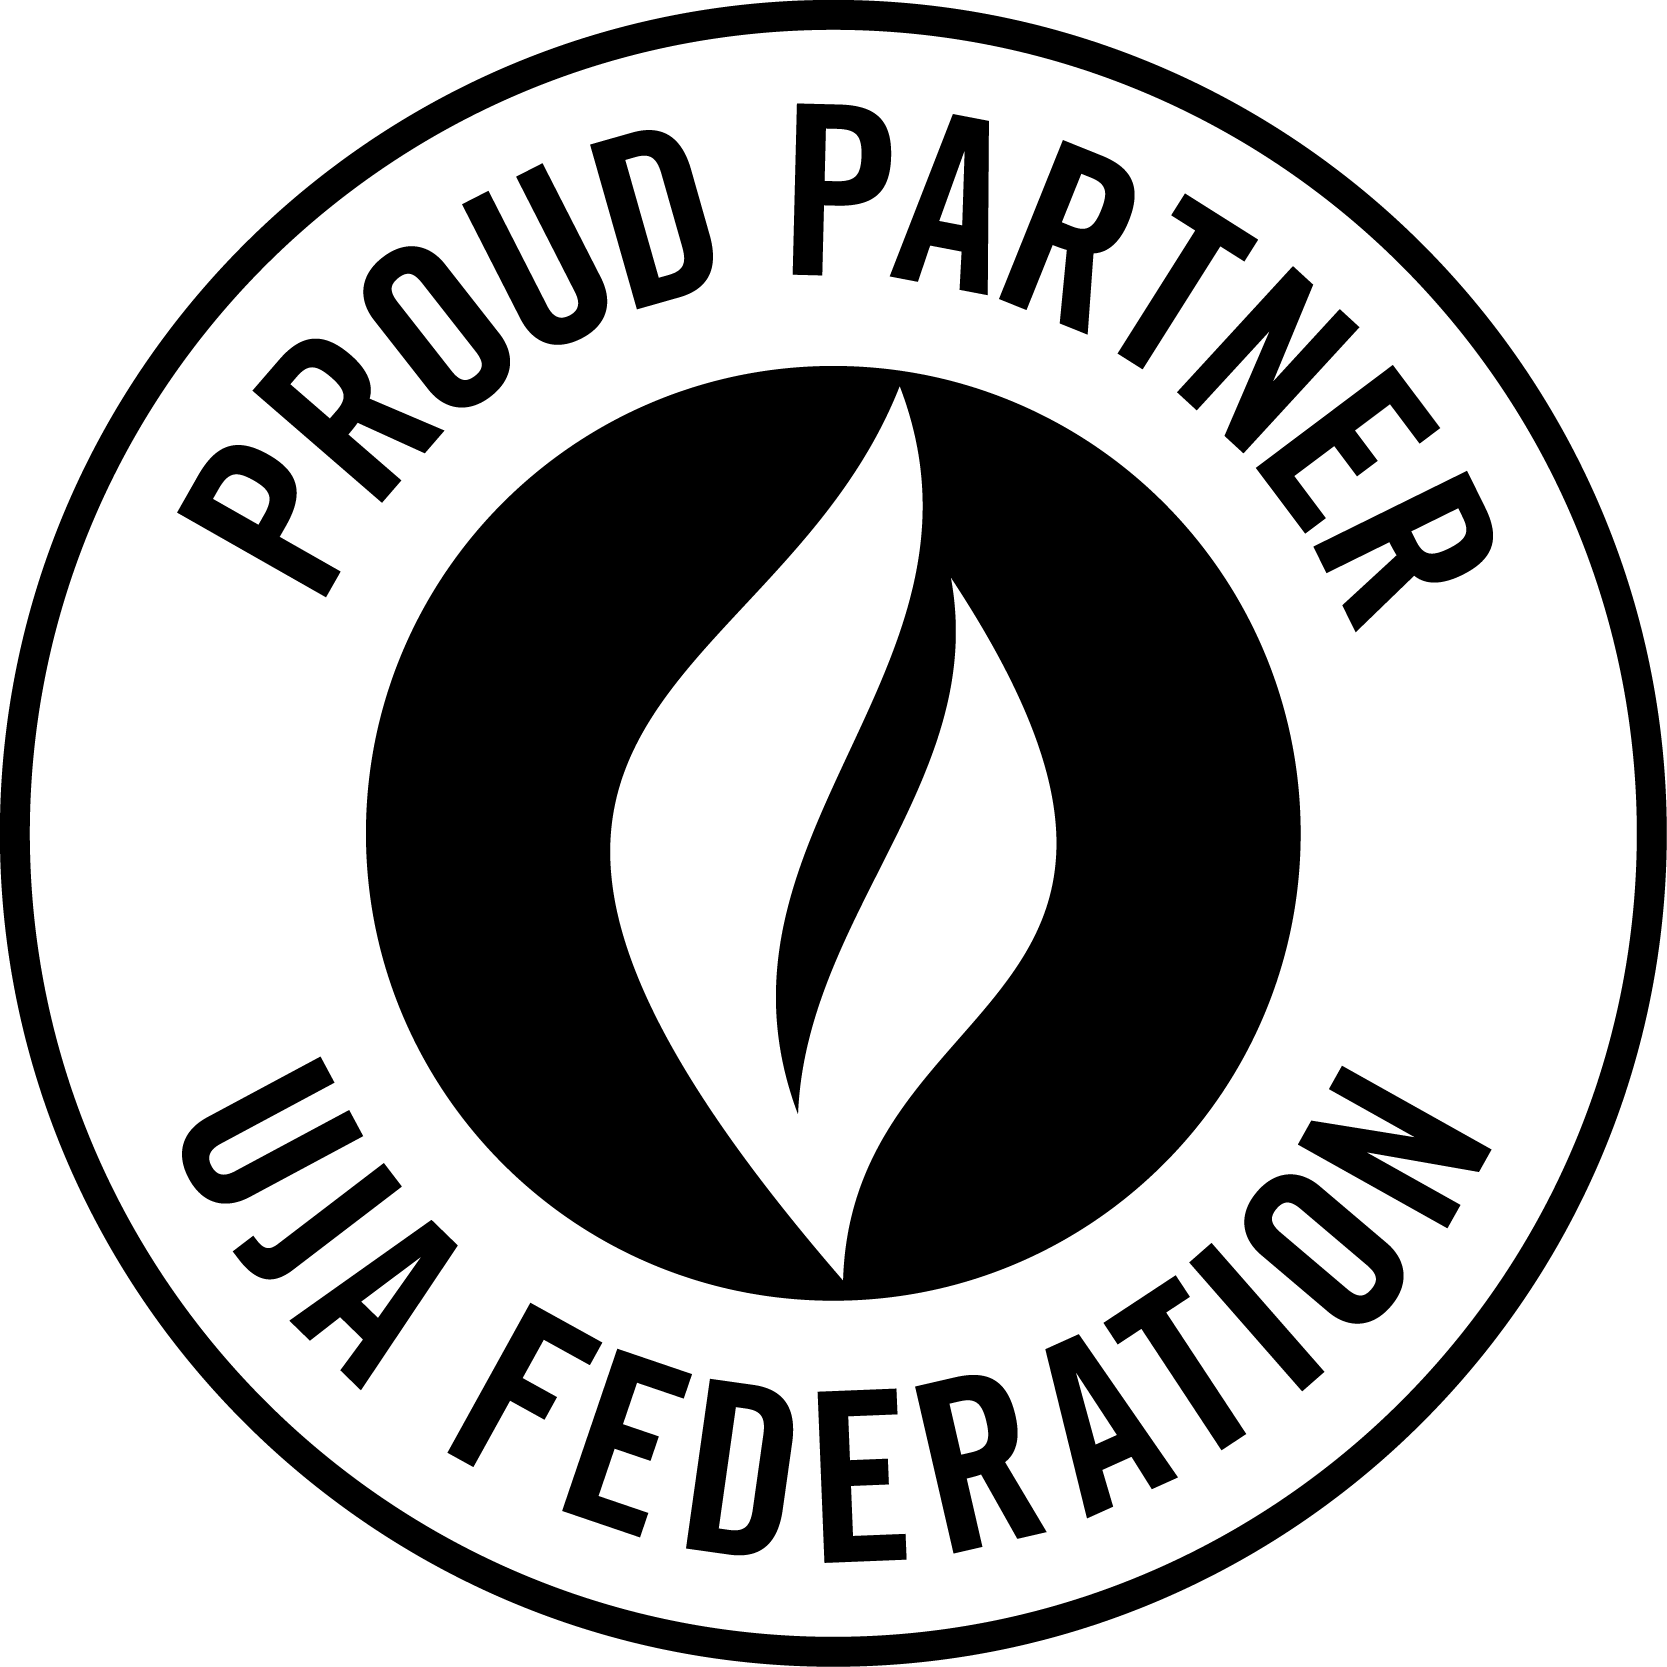 UJA footer logo